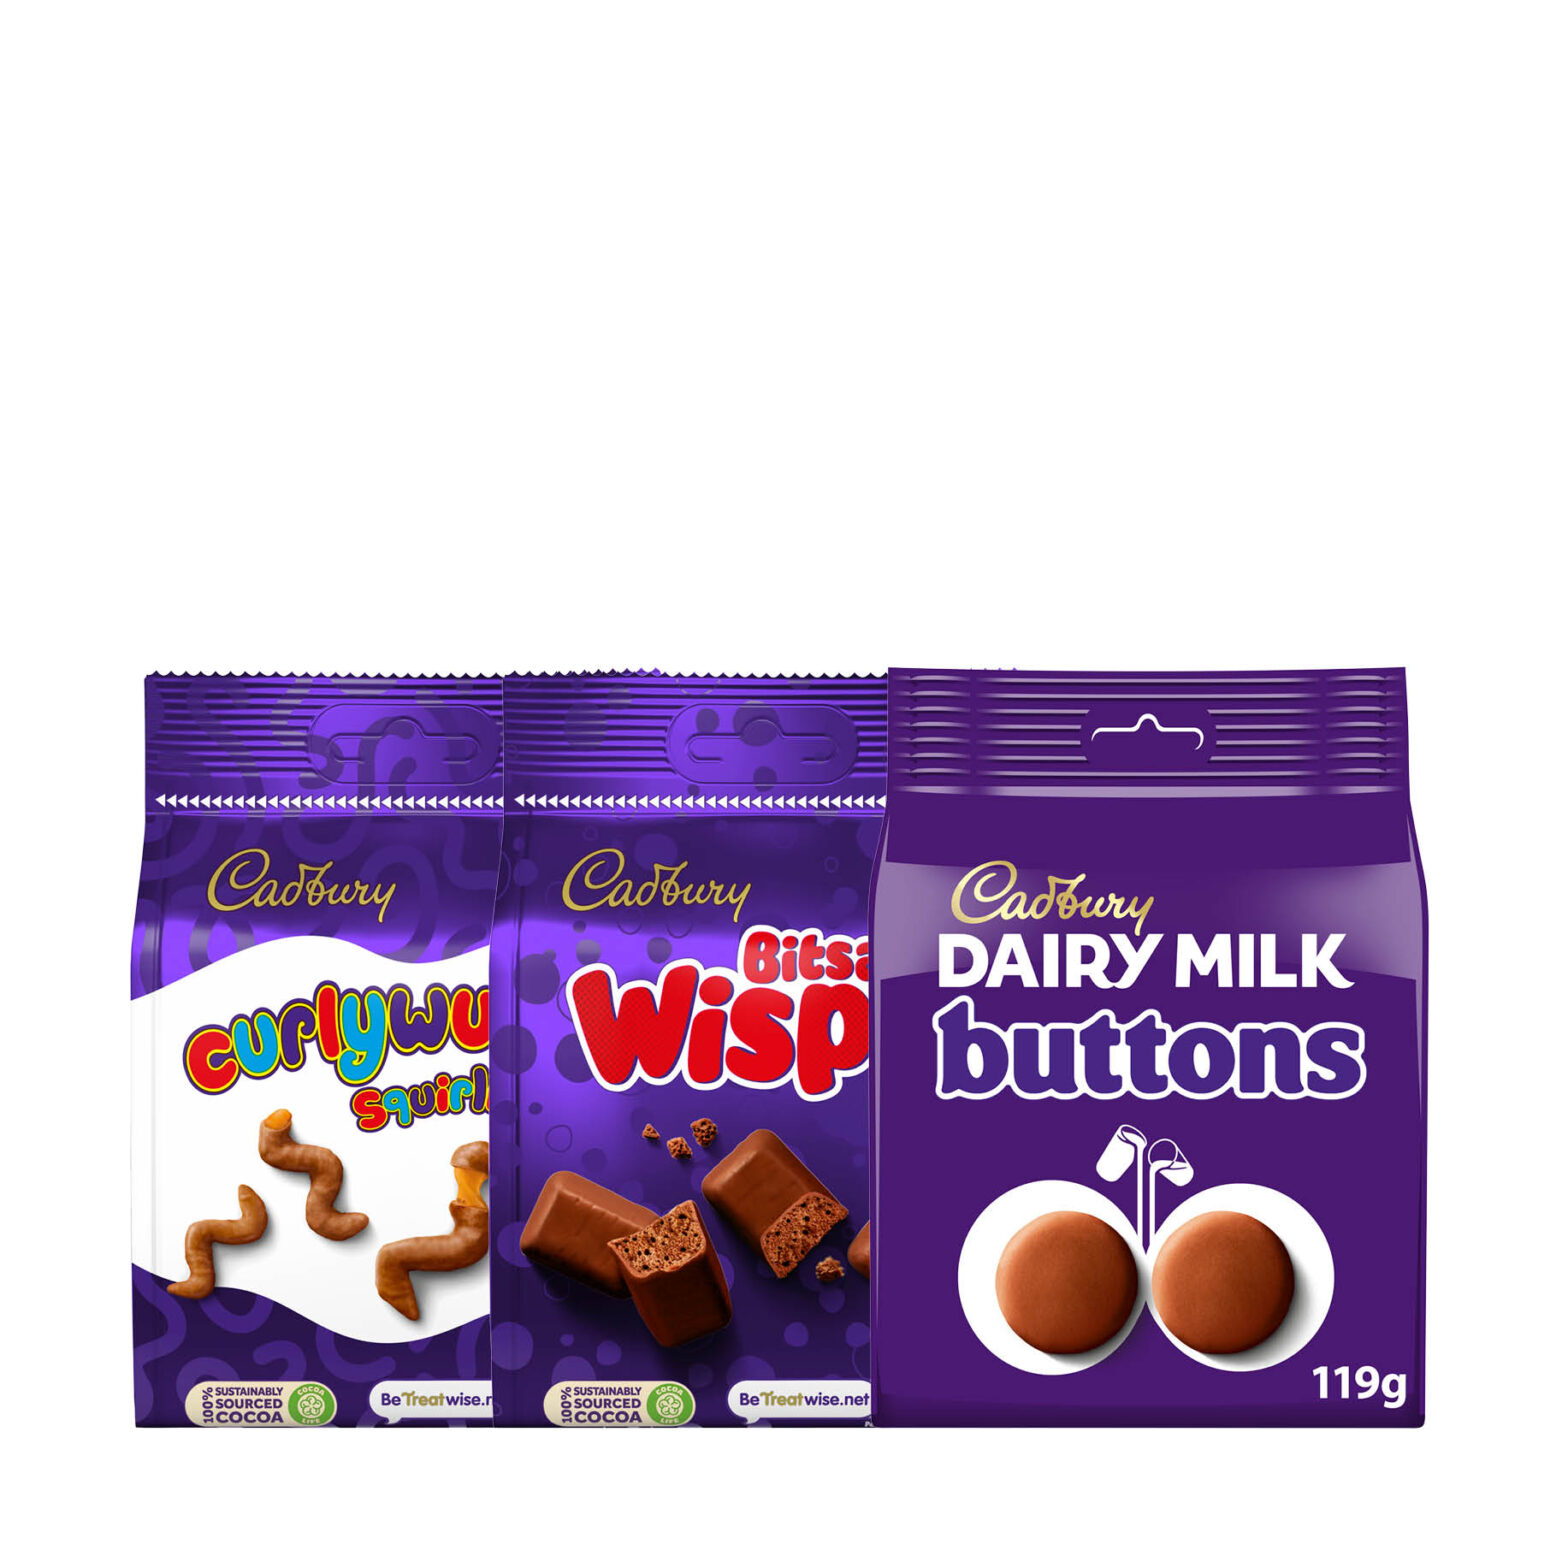 Cadbury Curly Wurly Squirlies Bag / Cadbury Wispa Bites / Cadbury Giant Buttons Milk